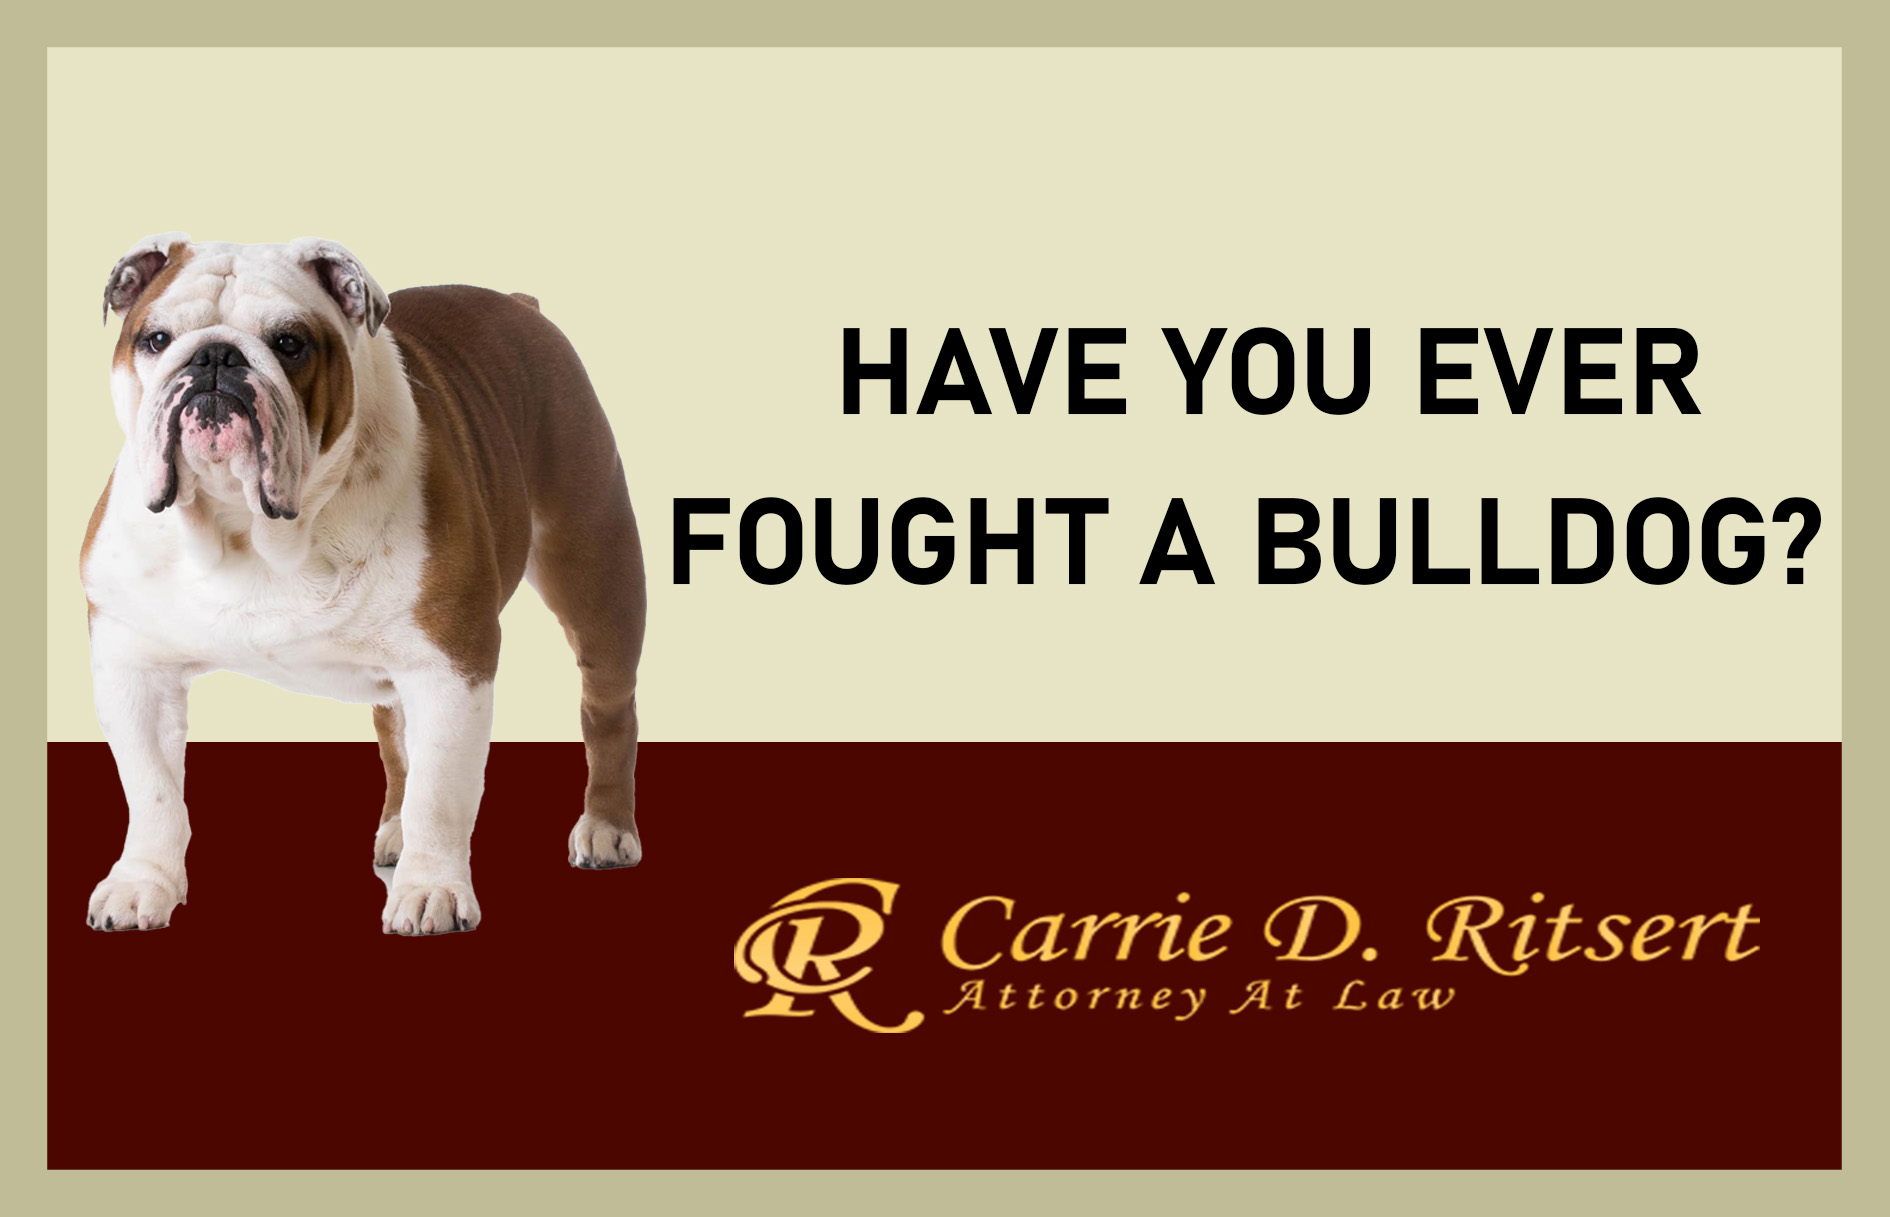 Have you ever fought a bulldog?